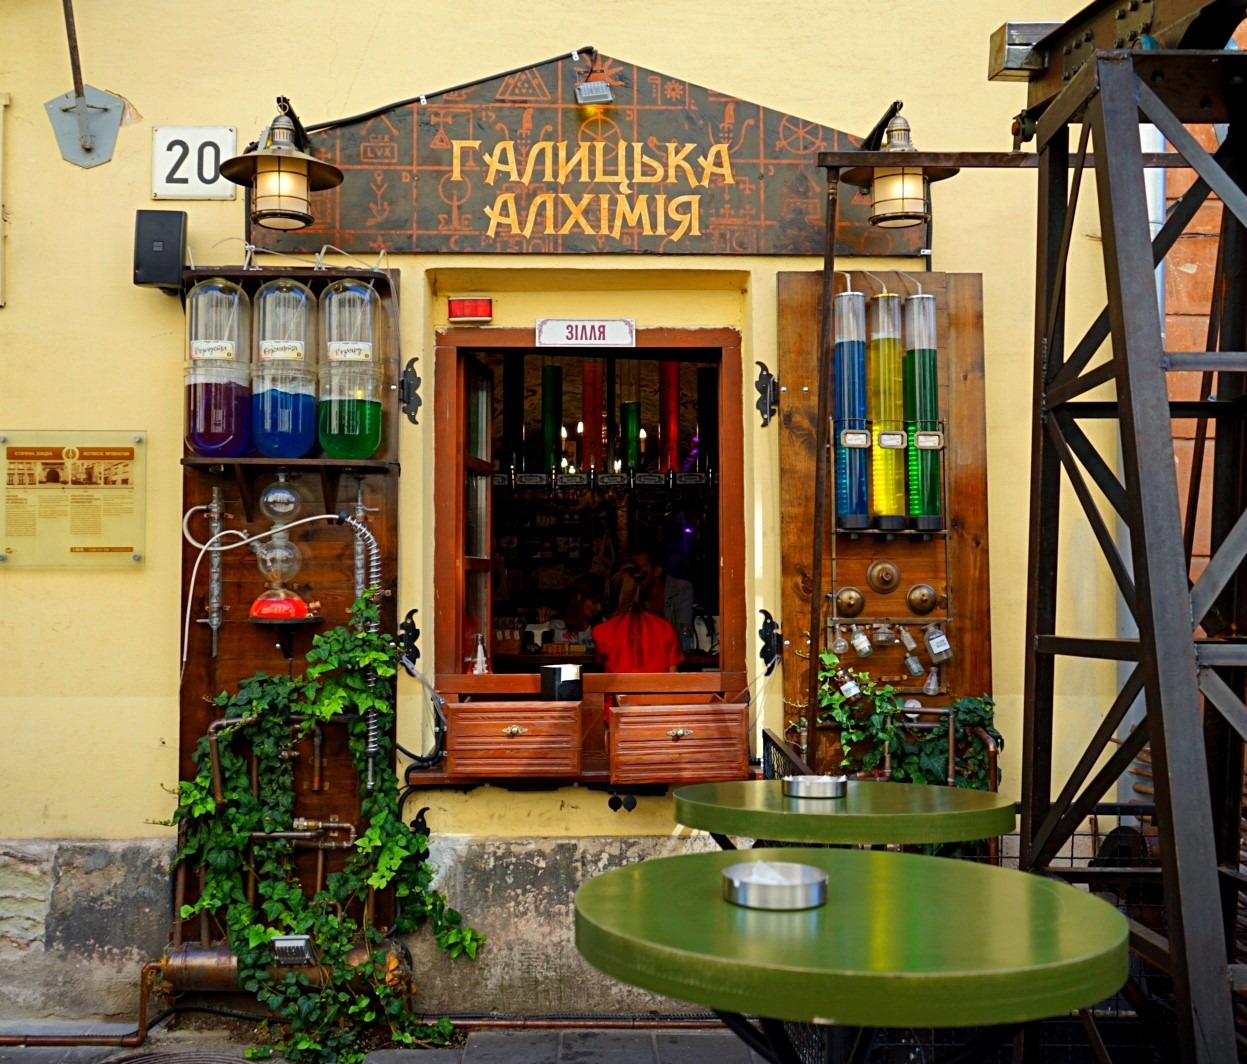 Galician Alchemy in Lviv, entrance